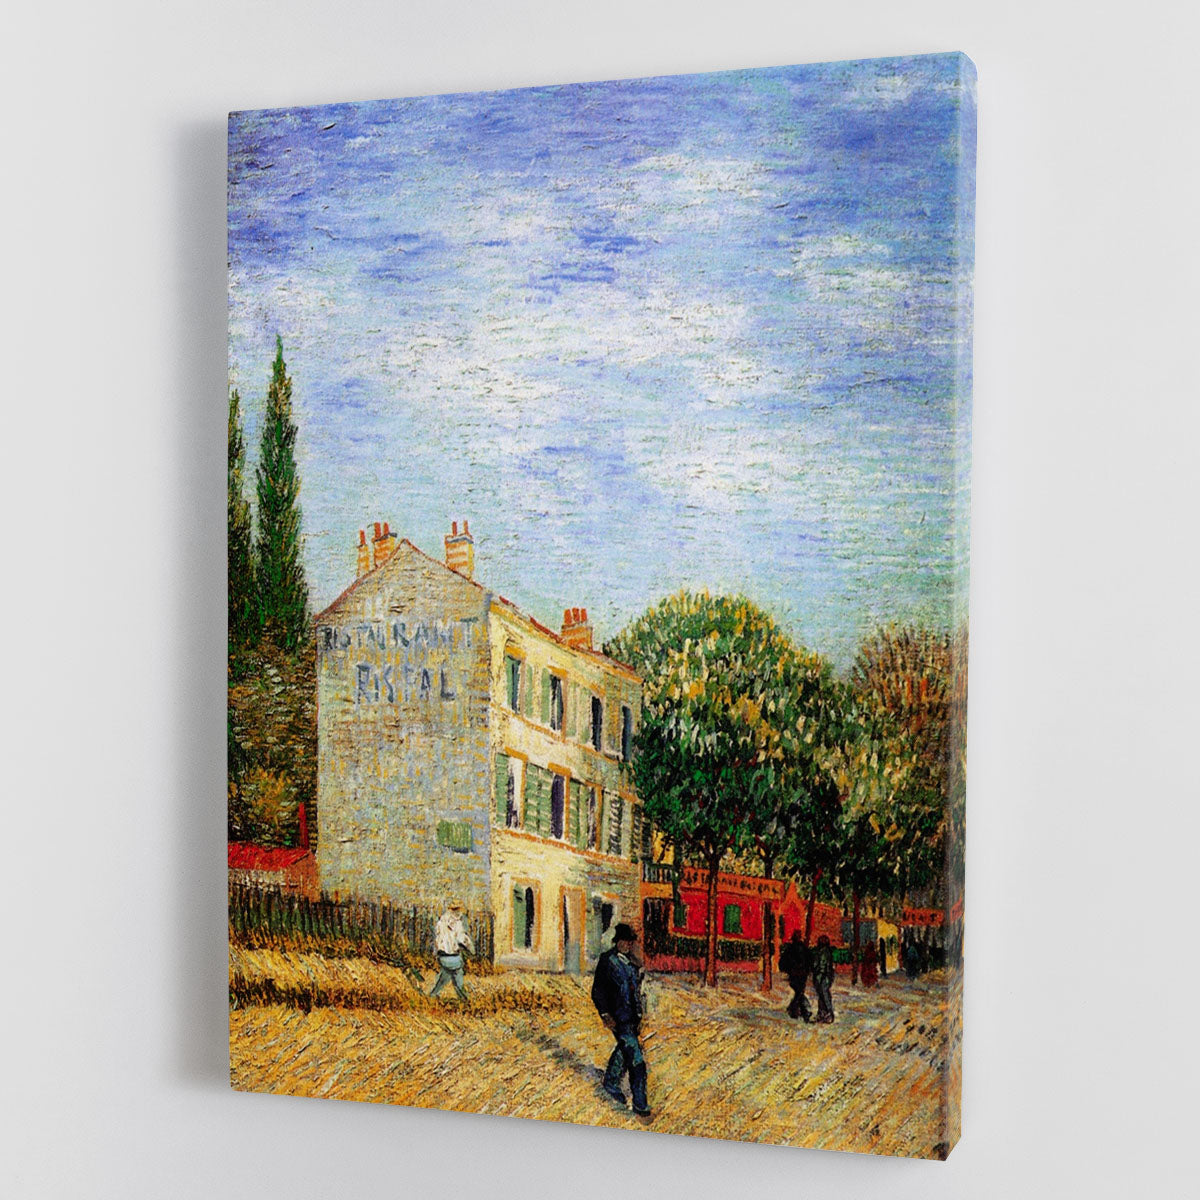 The Rispal Restaurant at Asnieres by Van Gogh Canvas Print or Poster - Canvas Art Rocks - 1